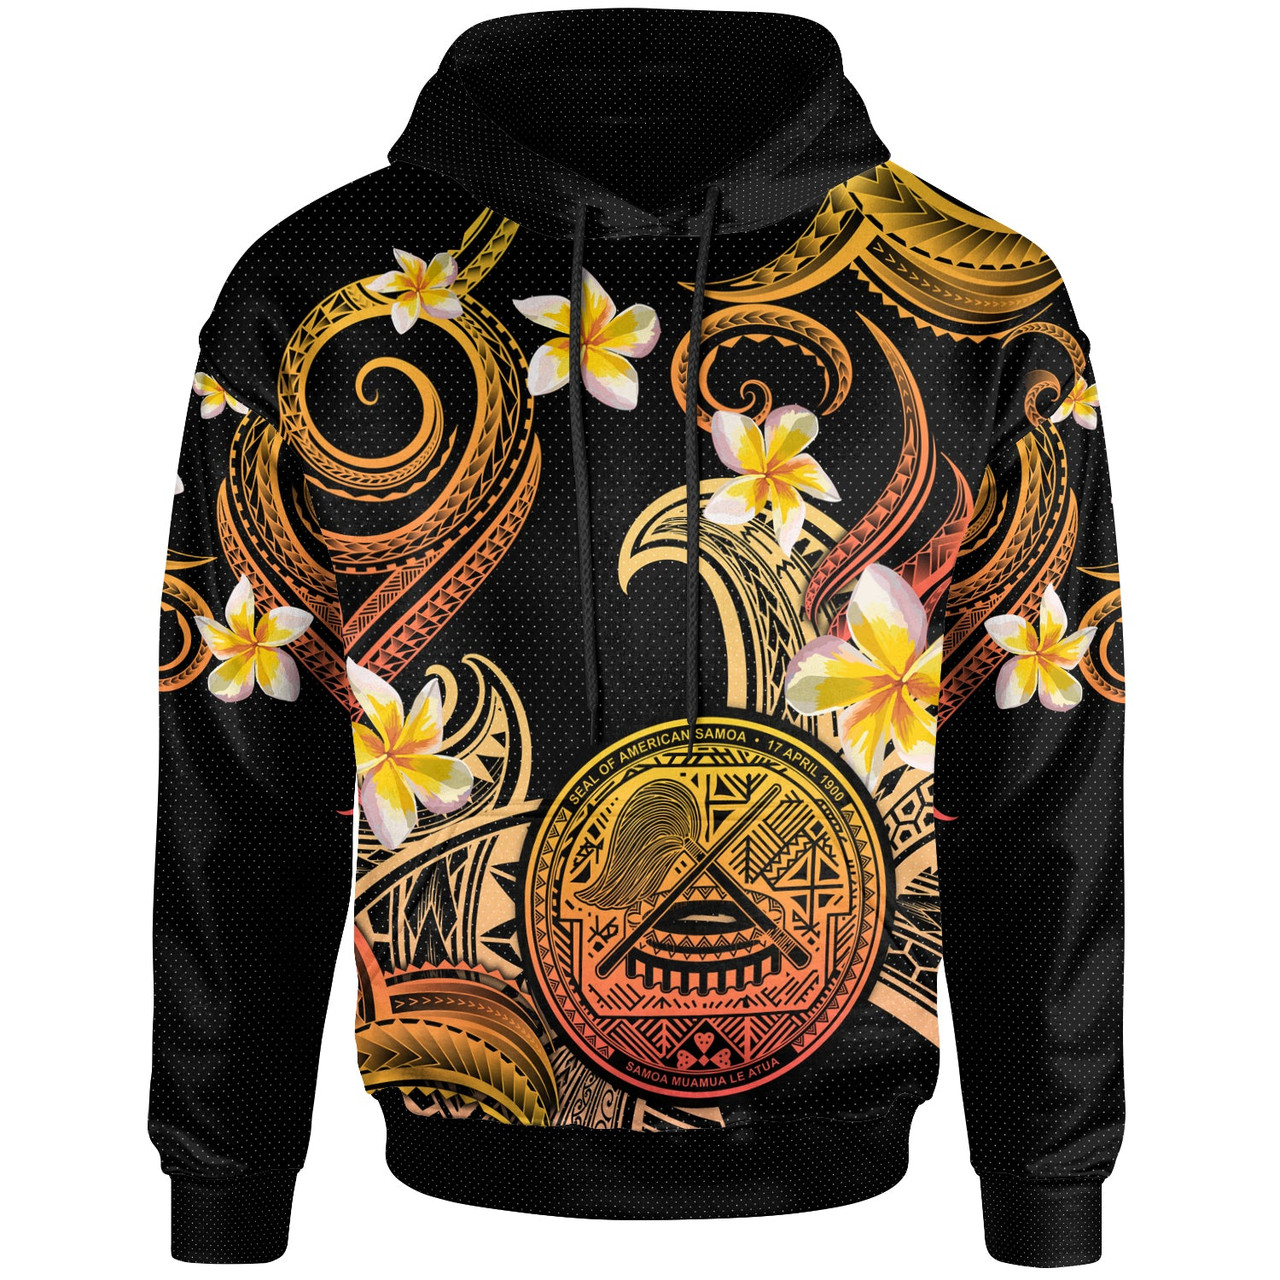 American Samoa Hoodie - Custom Personalised Polynesian Waves with Plumeria Flowers (Orange)